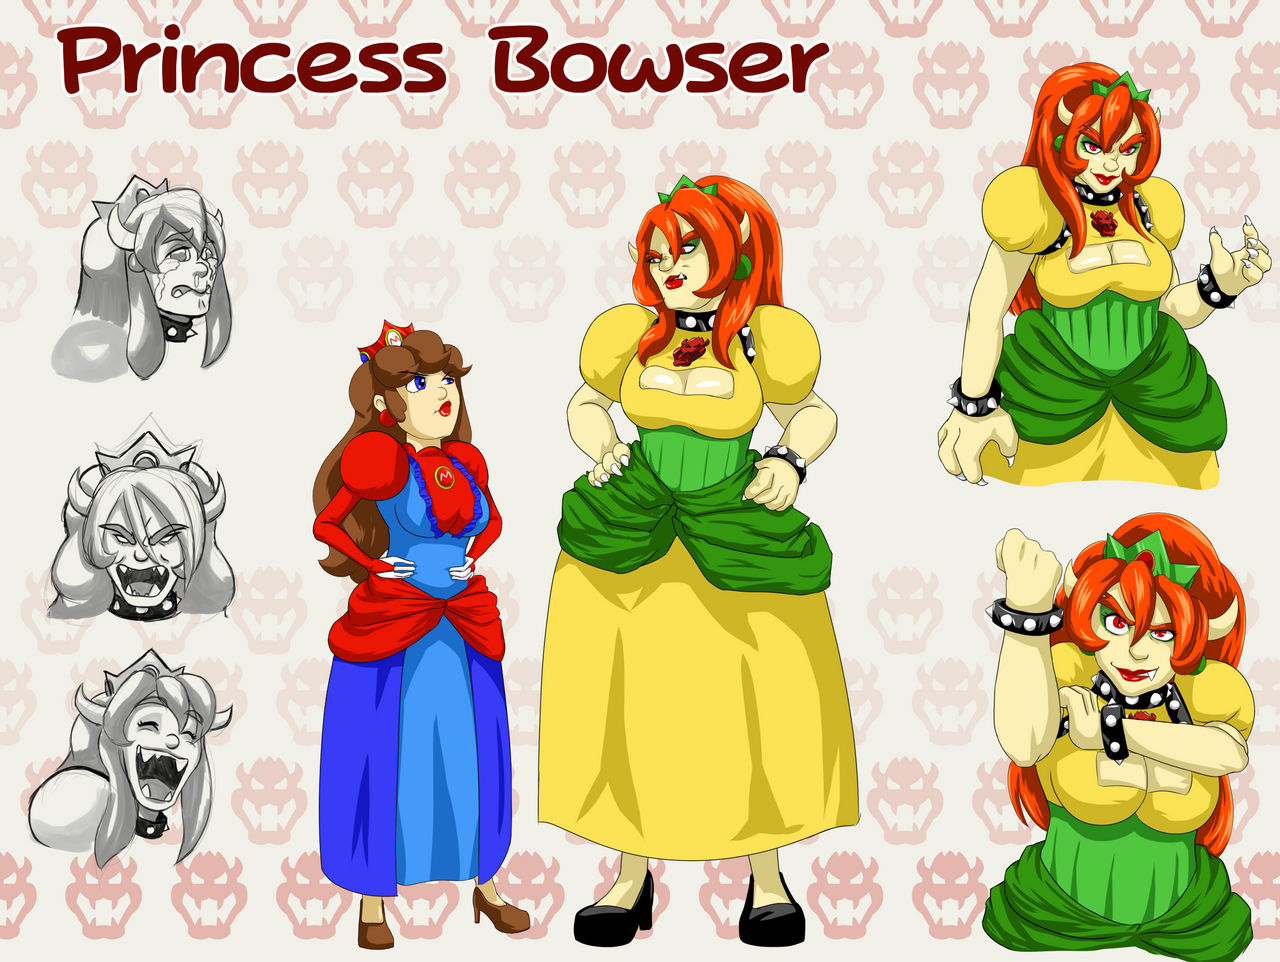 Princess Bowser